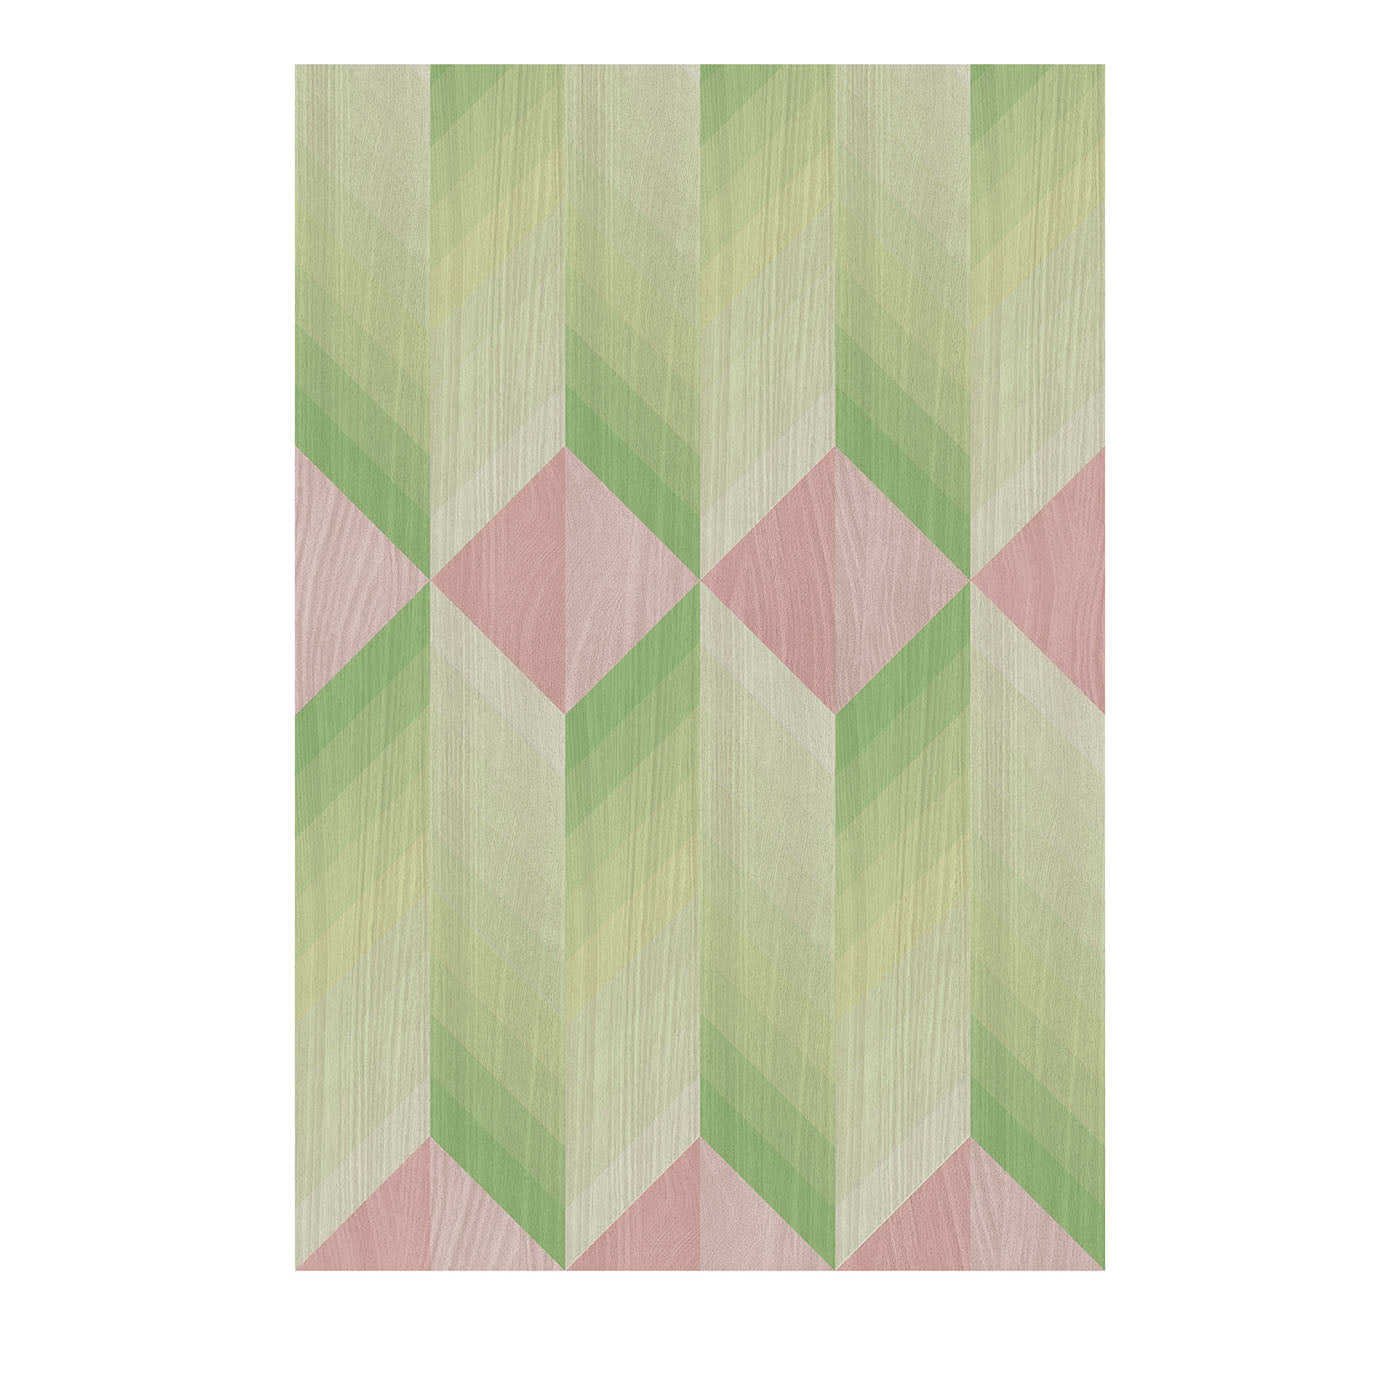 Geometry Triangles Green Wallpaper - Main view